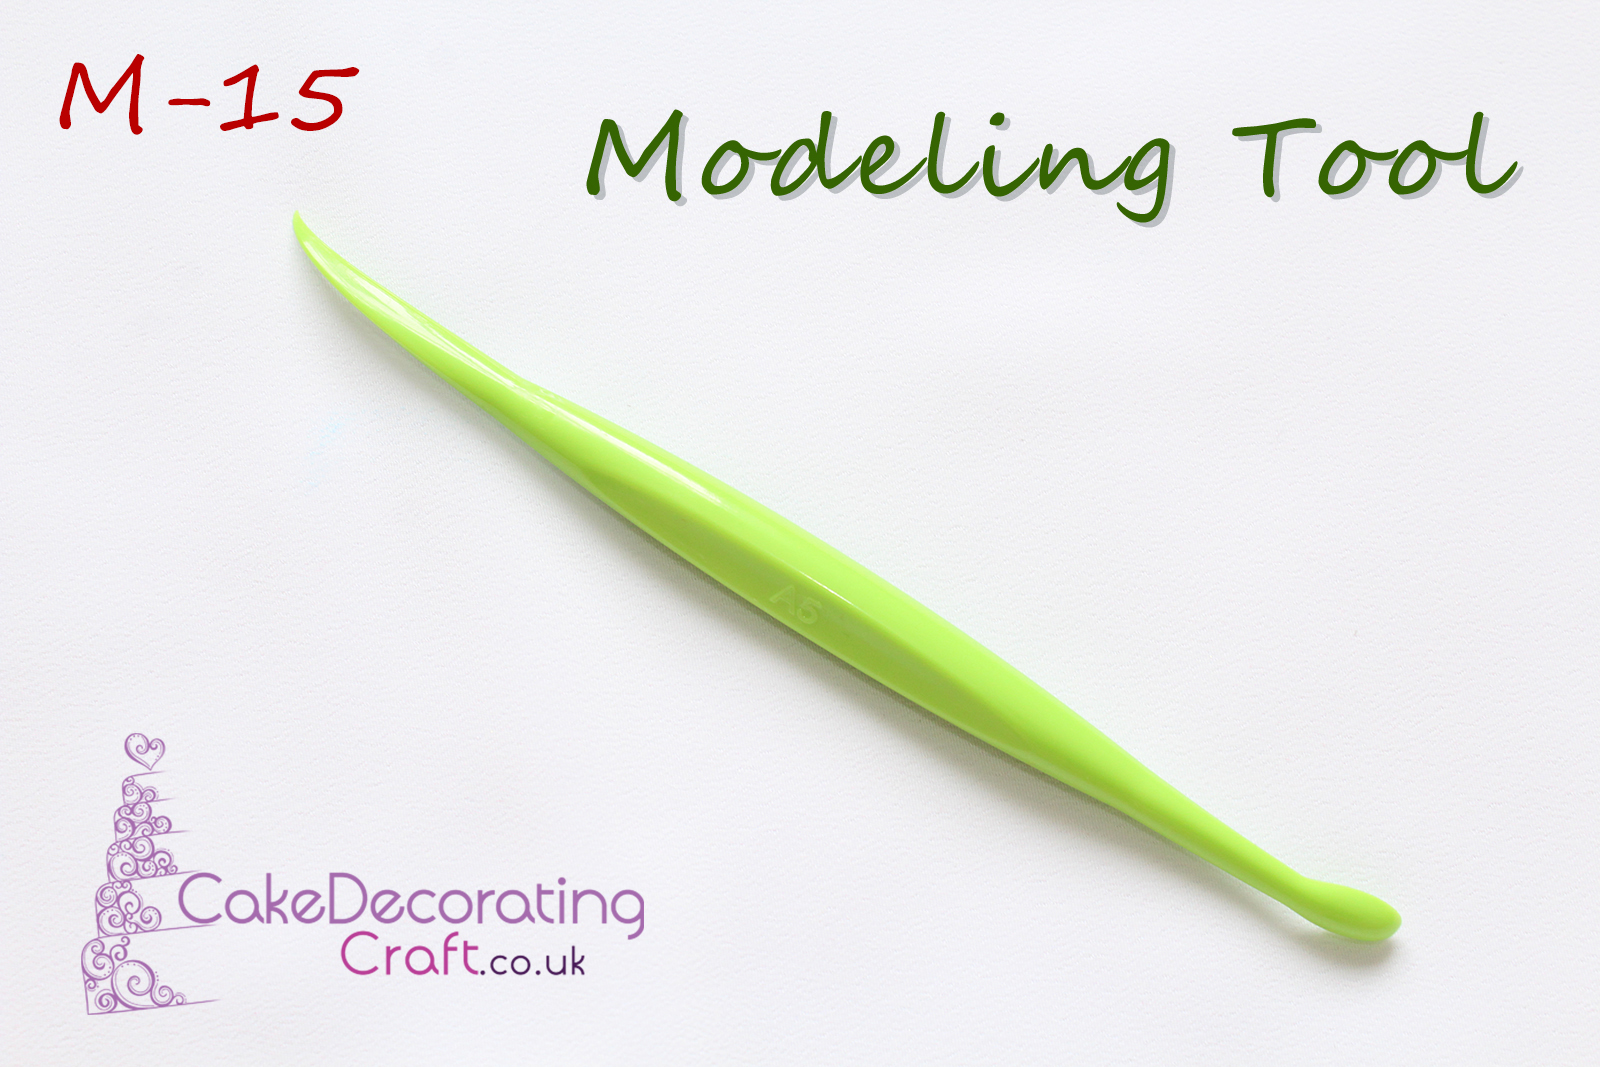 Cake Decorating Craft Modelling Tools | Double Ended | Gum Paste Flower Paste Modelling Sugar Paste Craft | M-15